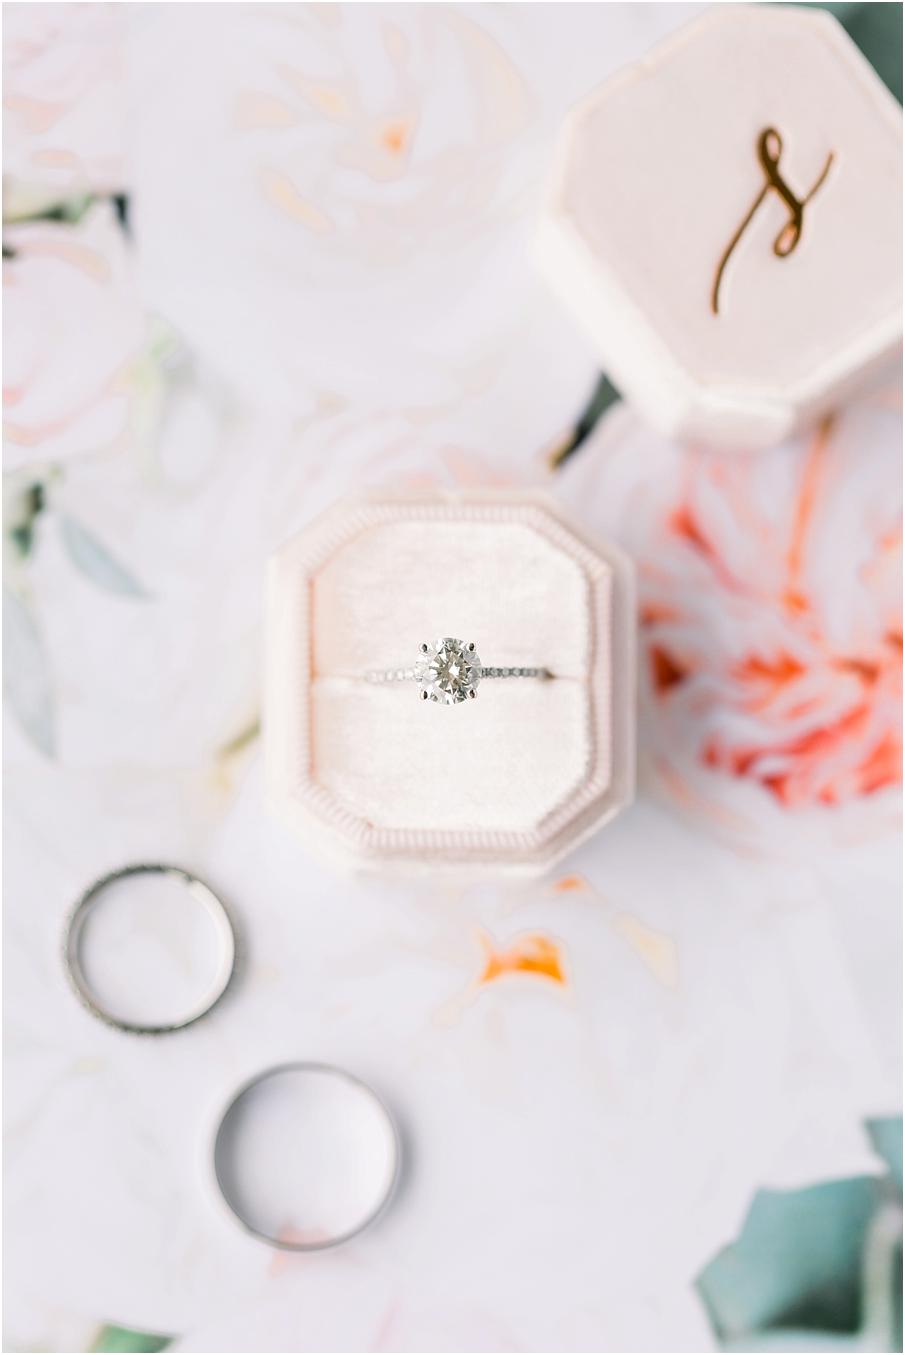 Blush Mrs box with engagement ring photo